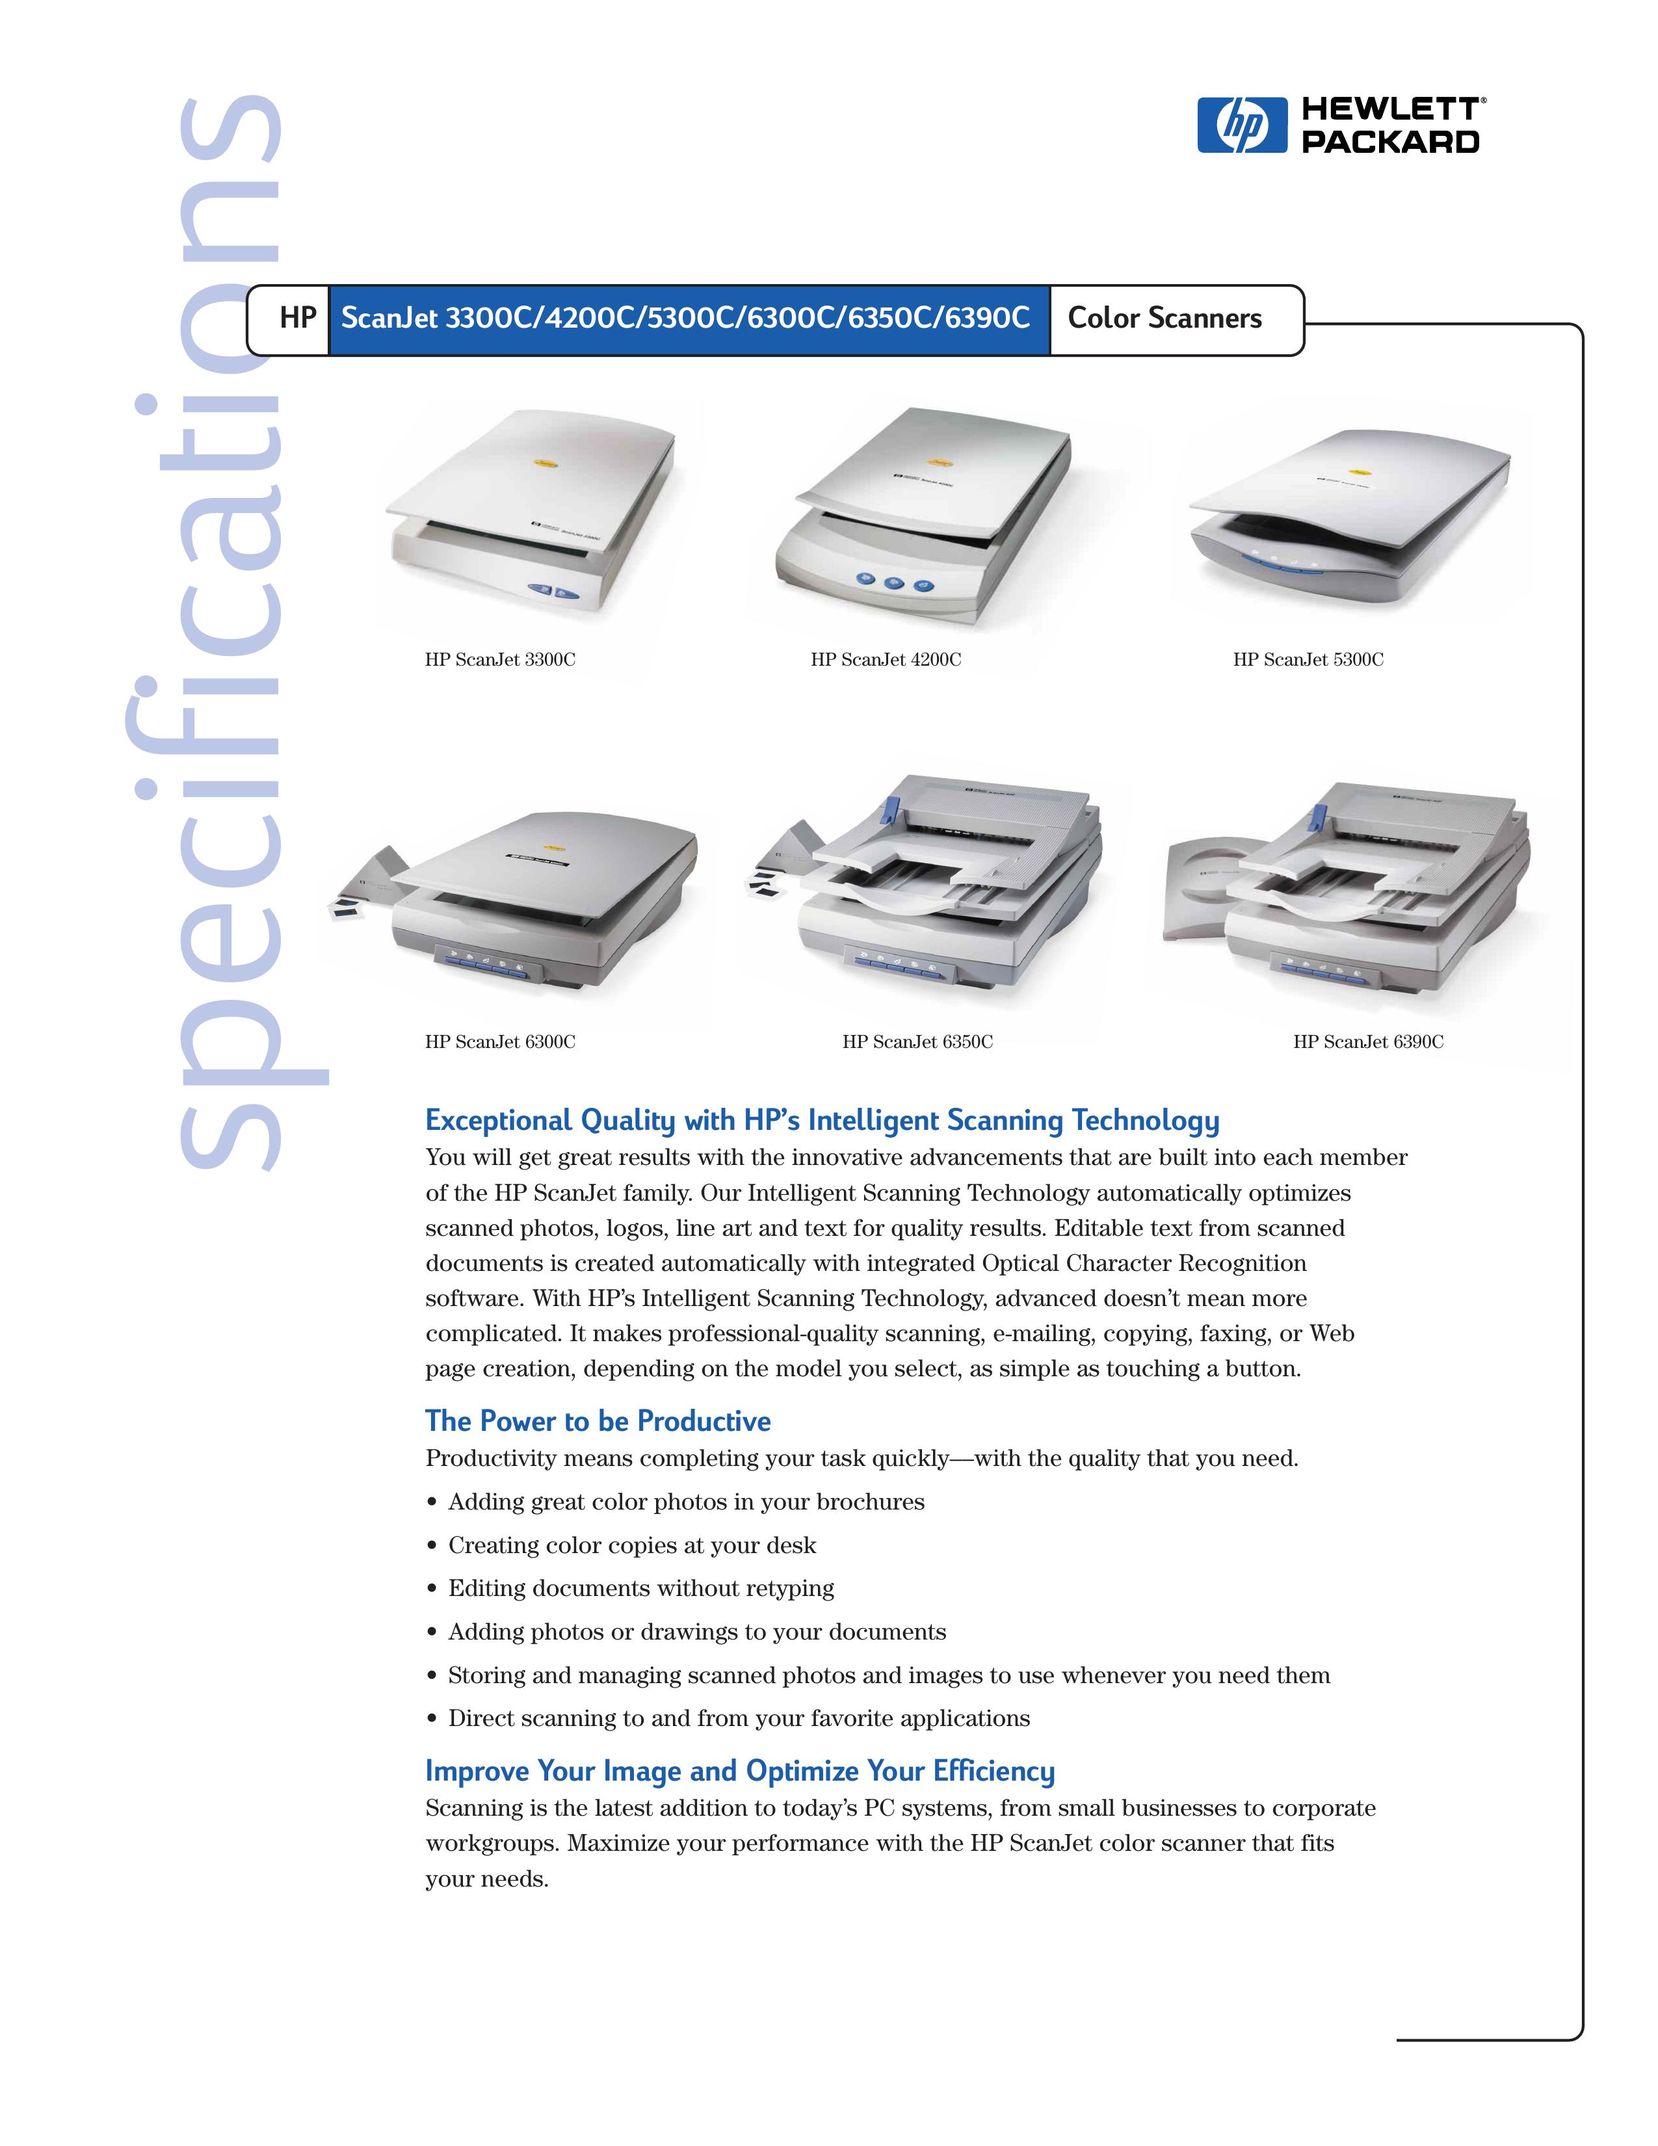 HP (Hewlett-Packard) 6300C Scanner User Manual